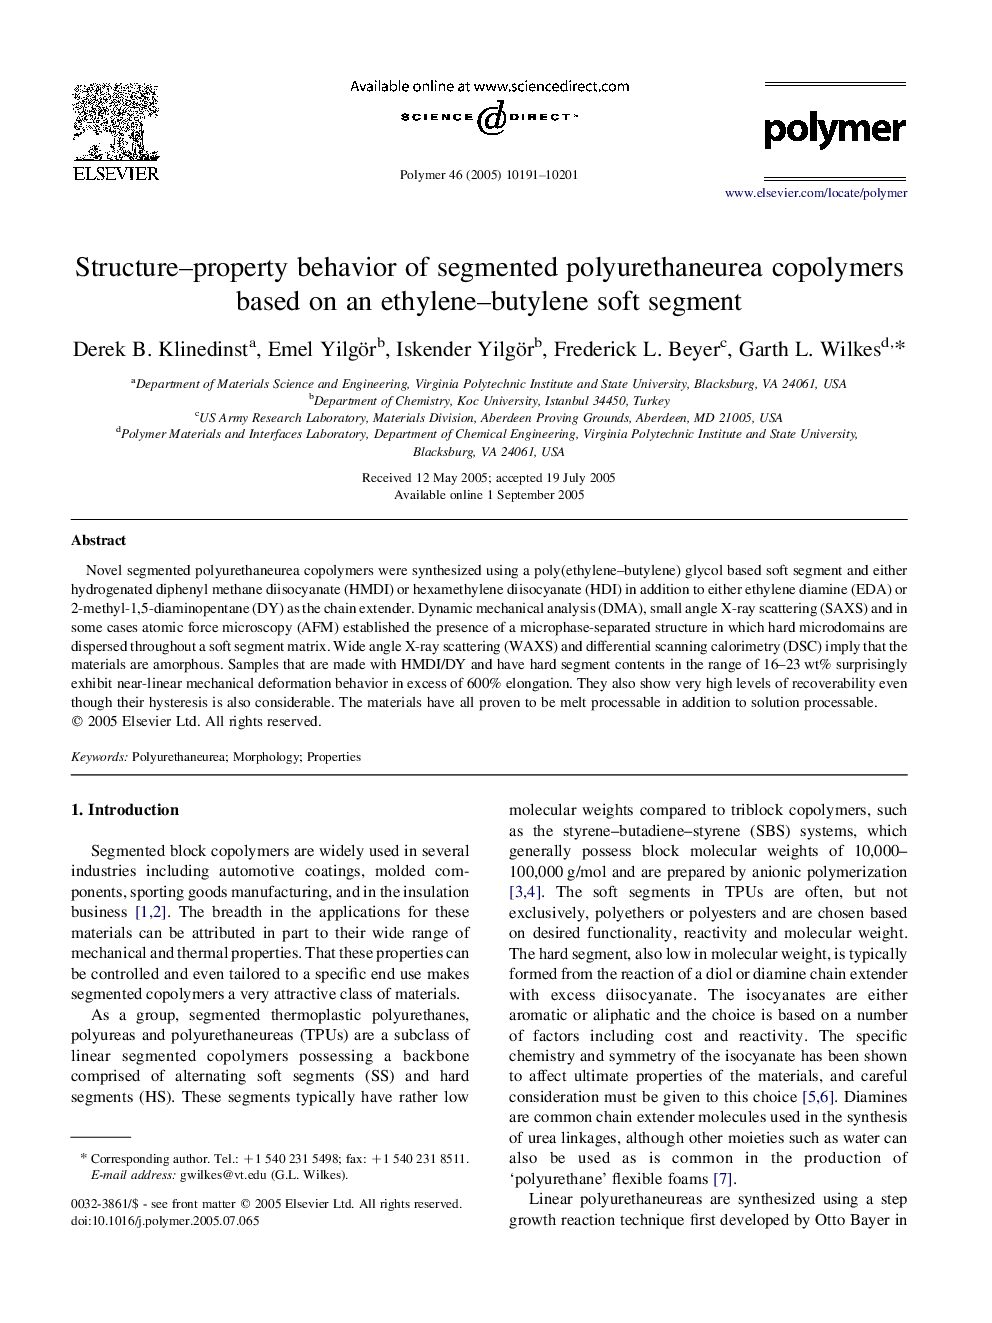 Structure-property behavior of segmented polyurethaneurea copolymers based on an ethylene-butylene soft segment